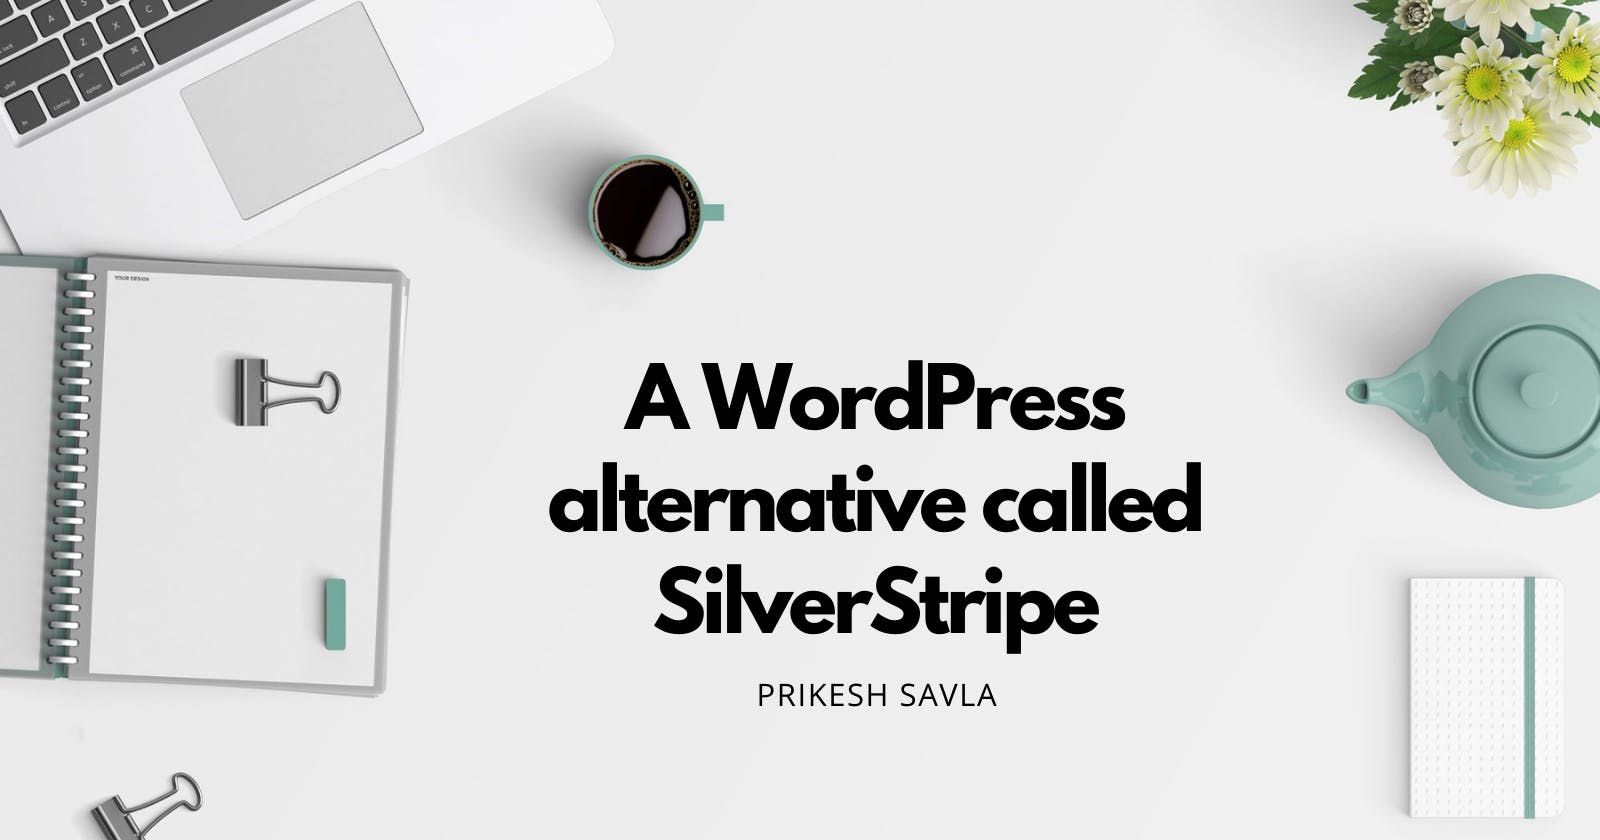 A WordPress alternative called SilverStripe